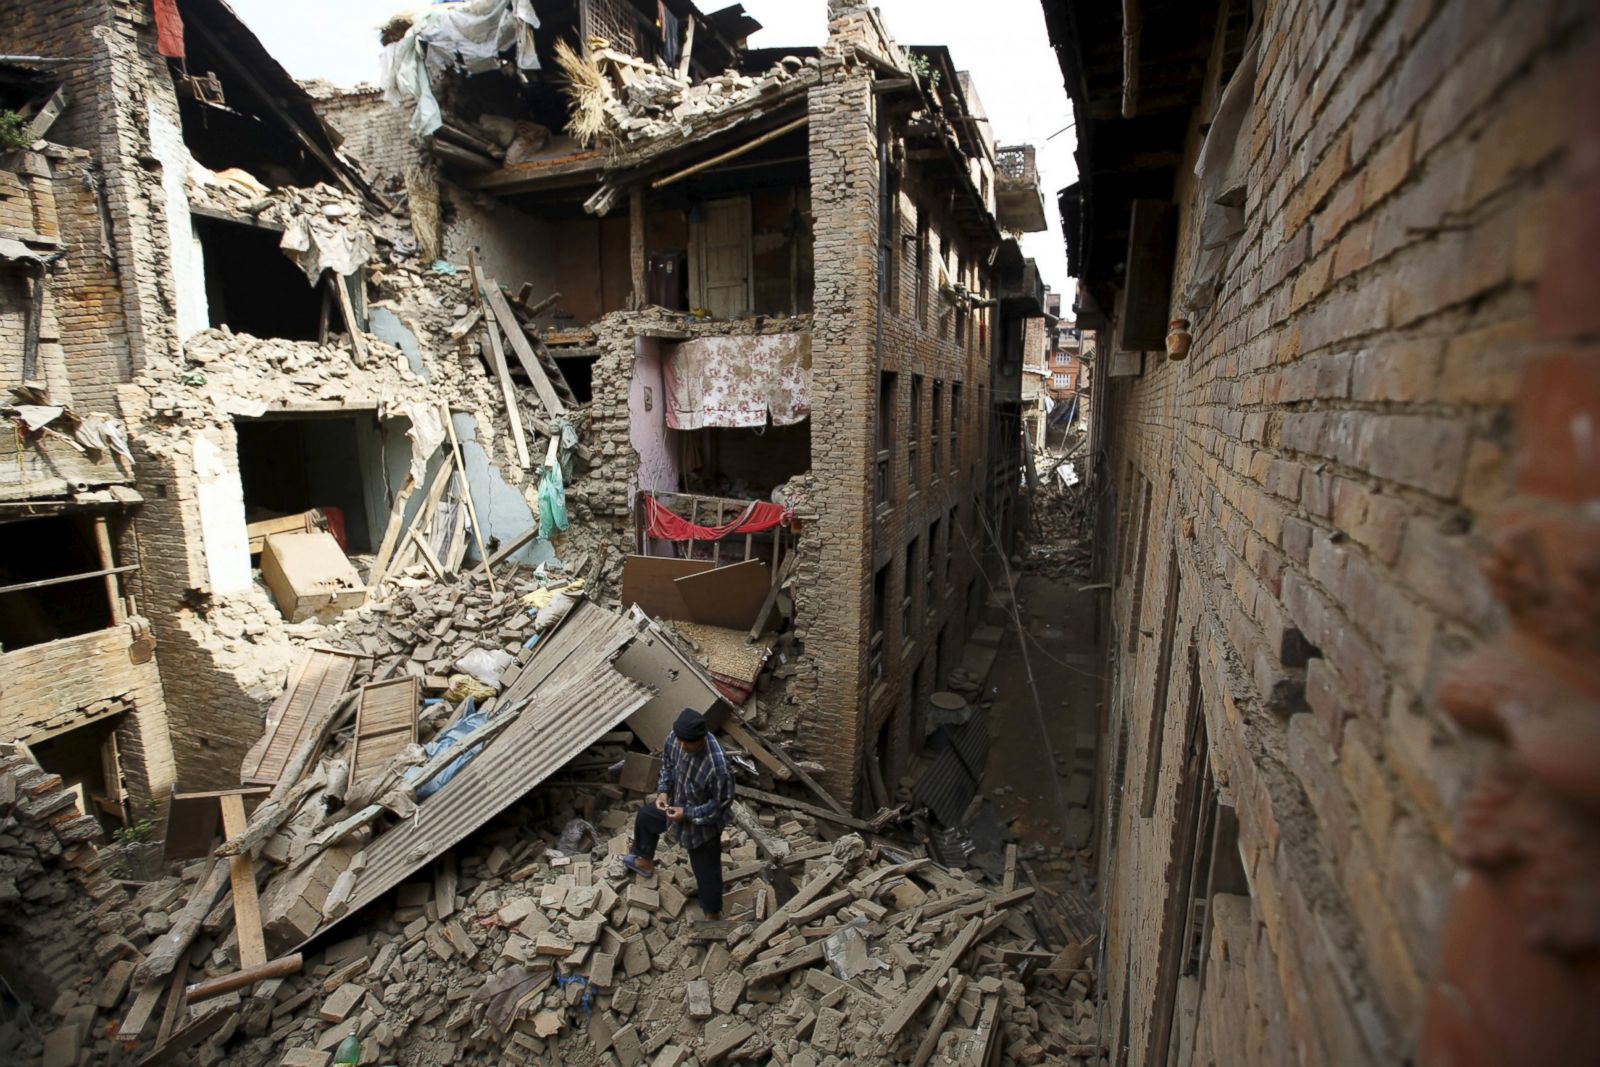 Tragic Earthquake Devastation in Nepal Photos Image 351 ABC News